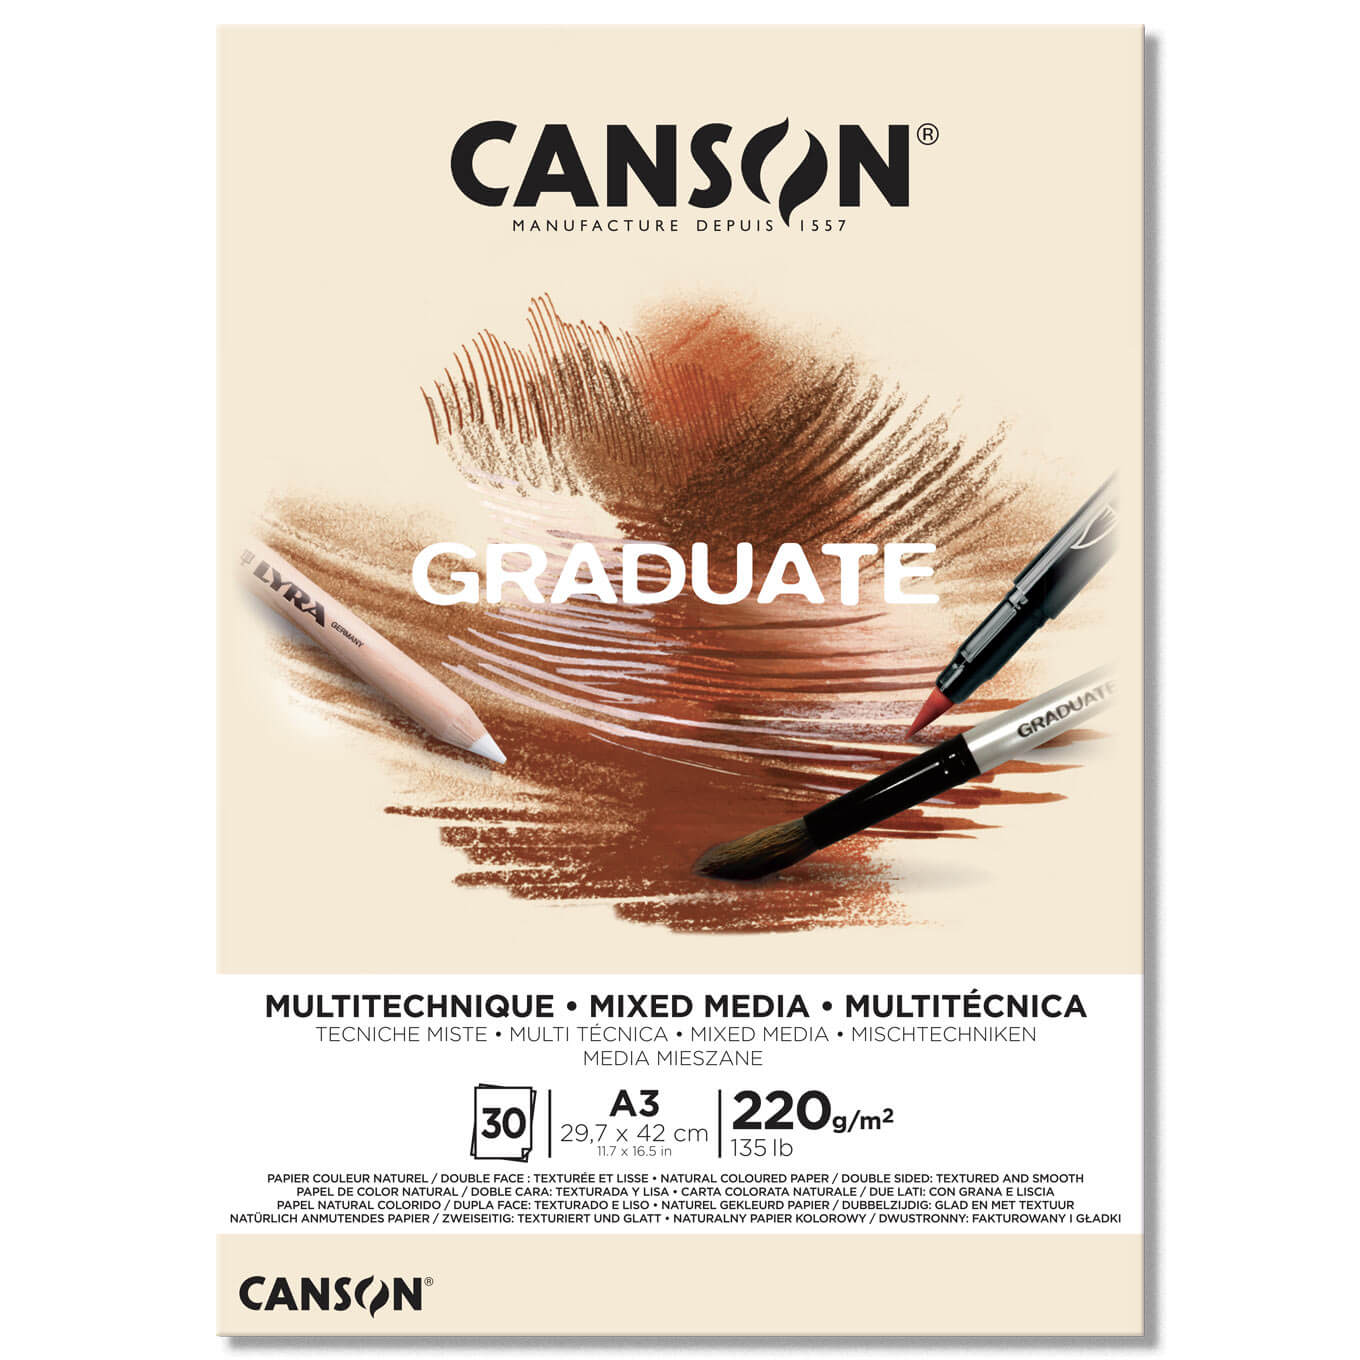 Canson Graduate Mixed Media Pad Yellow Ochre 220 gsm.